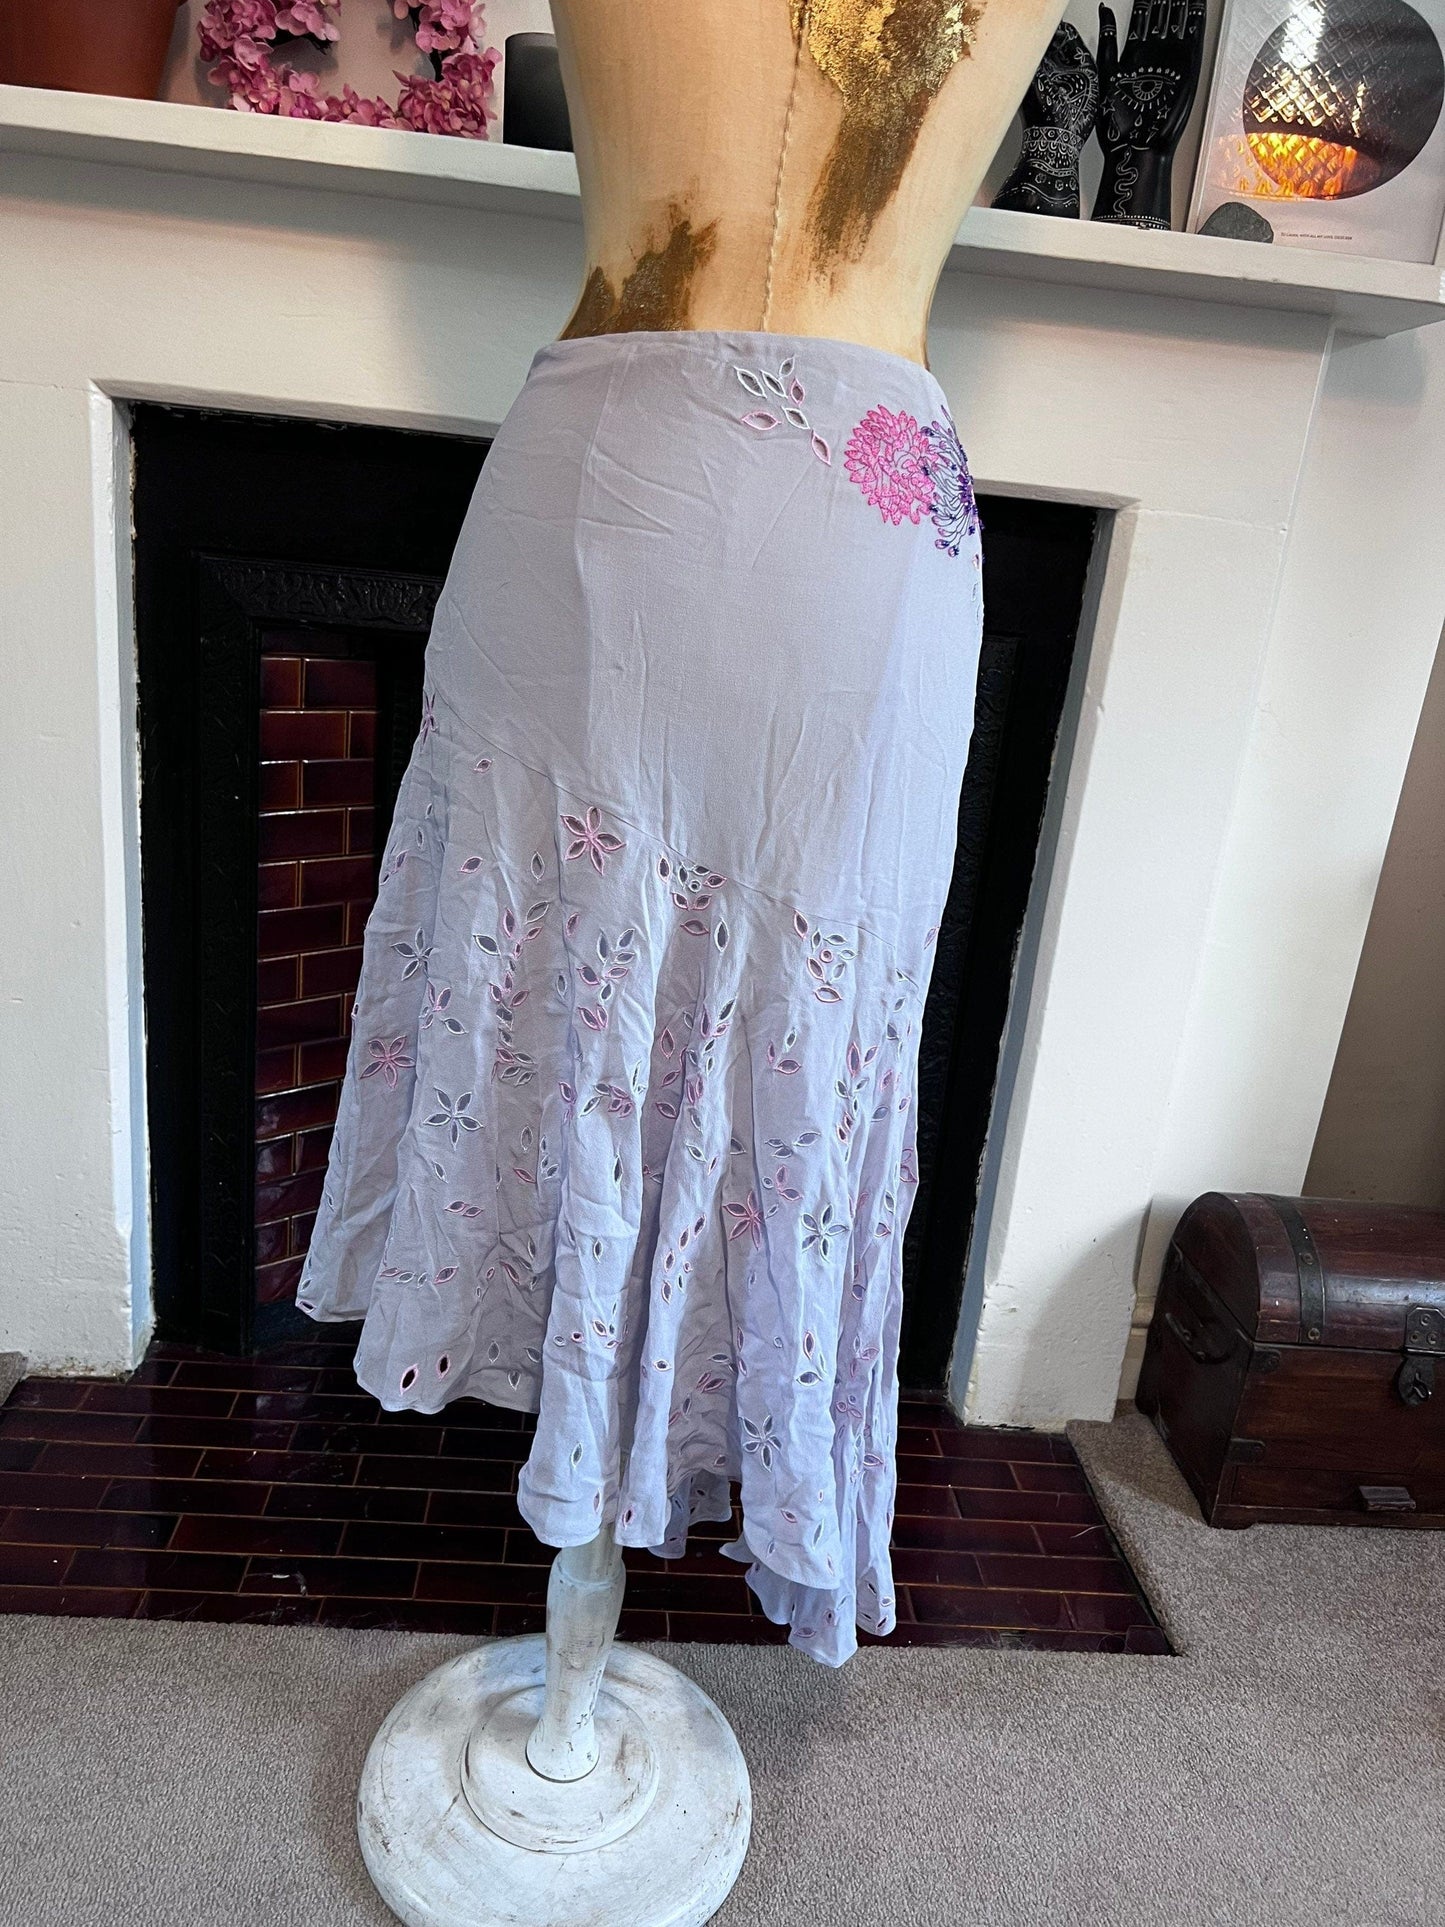 Vintage Purple Silk Skirt - Karen Millen Stretch Lace UK12 lilac Lined Skirt - Asymmetric Pixie Hem